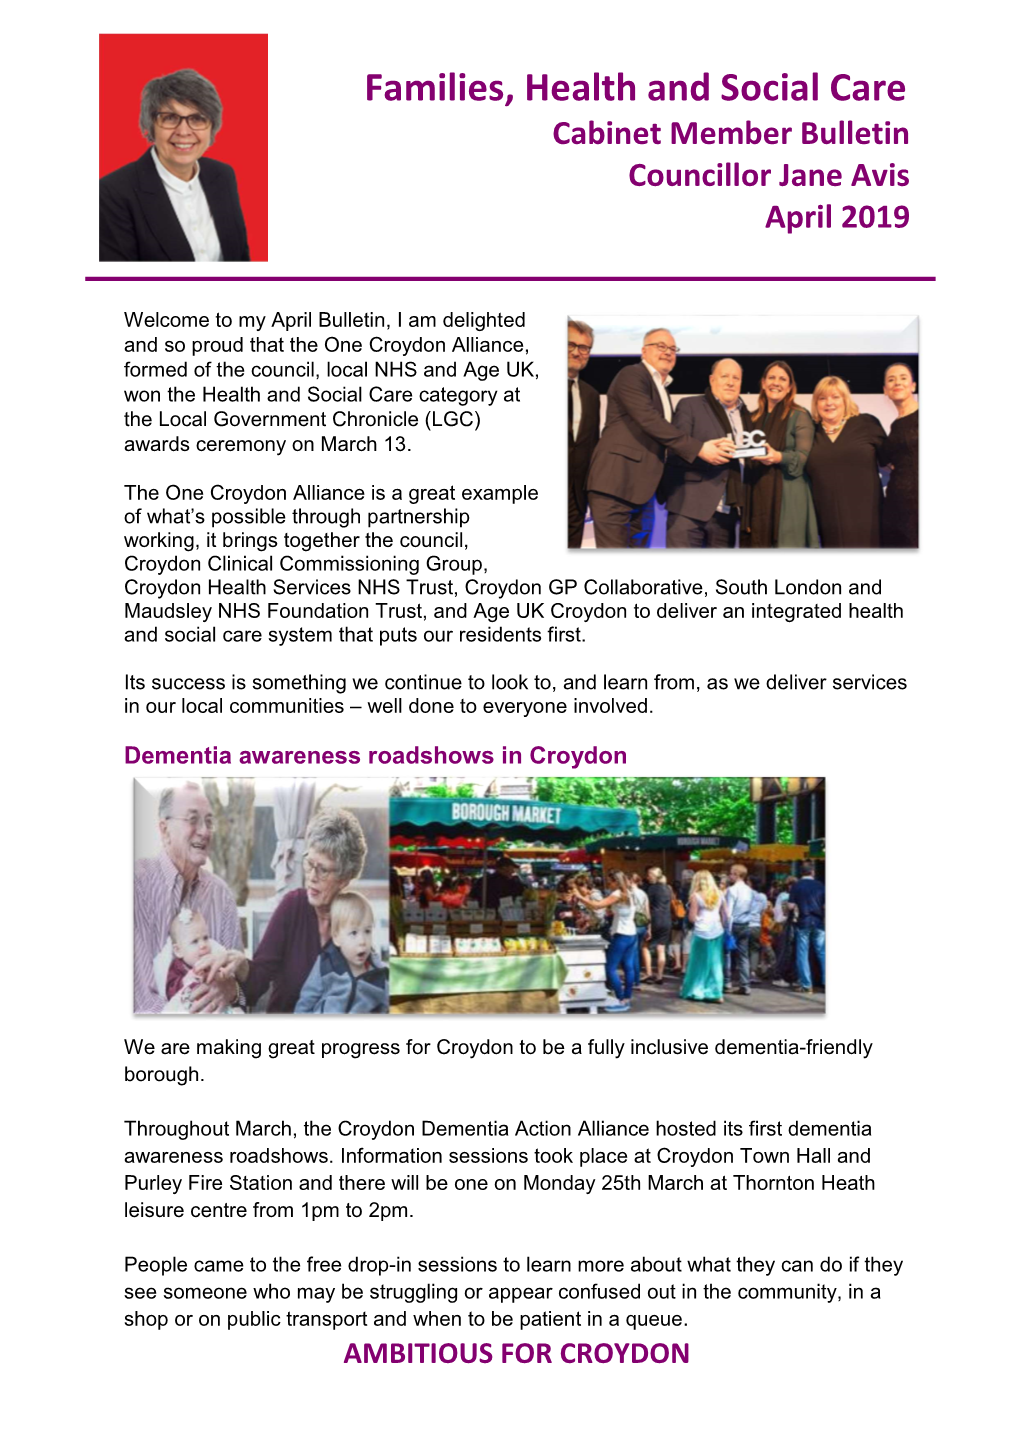 Families, Health and Social Care Cabinet Member Bulletin Councillor Jane Avis April 2019